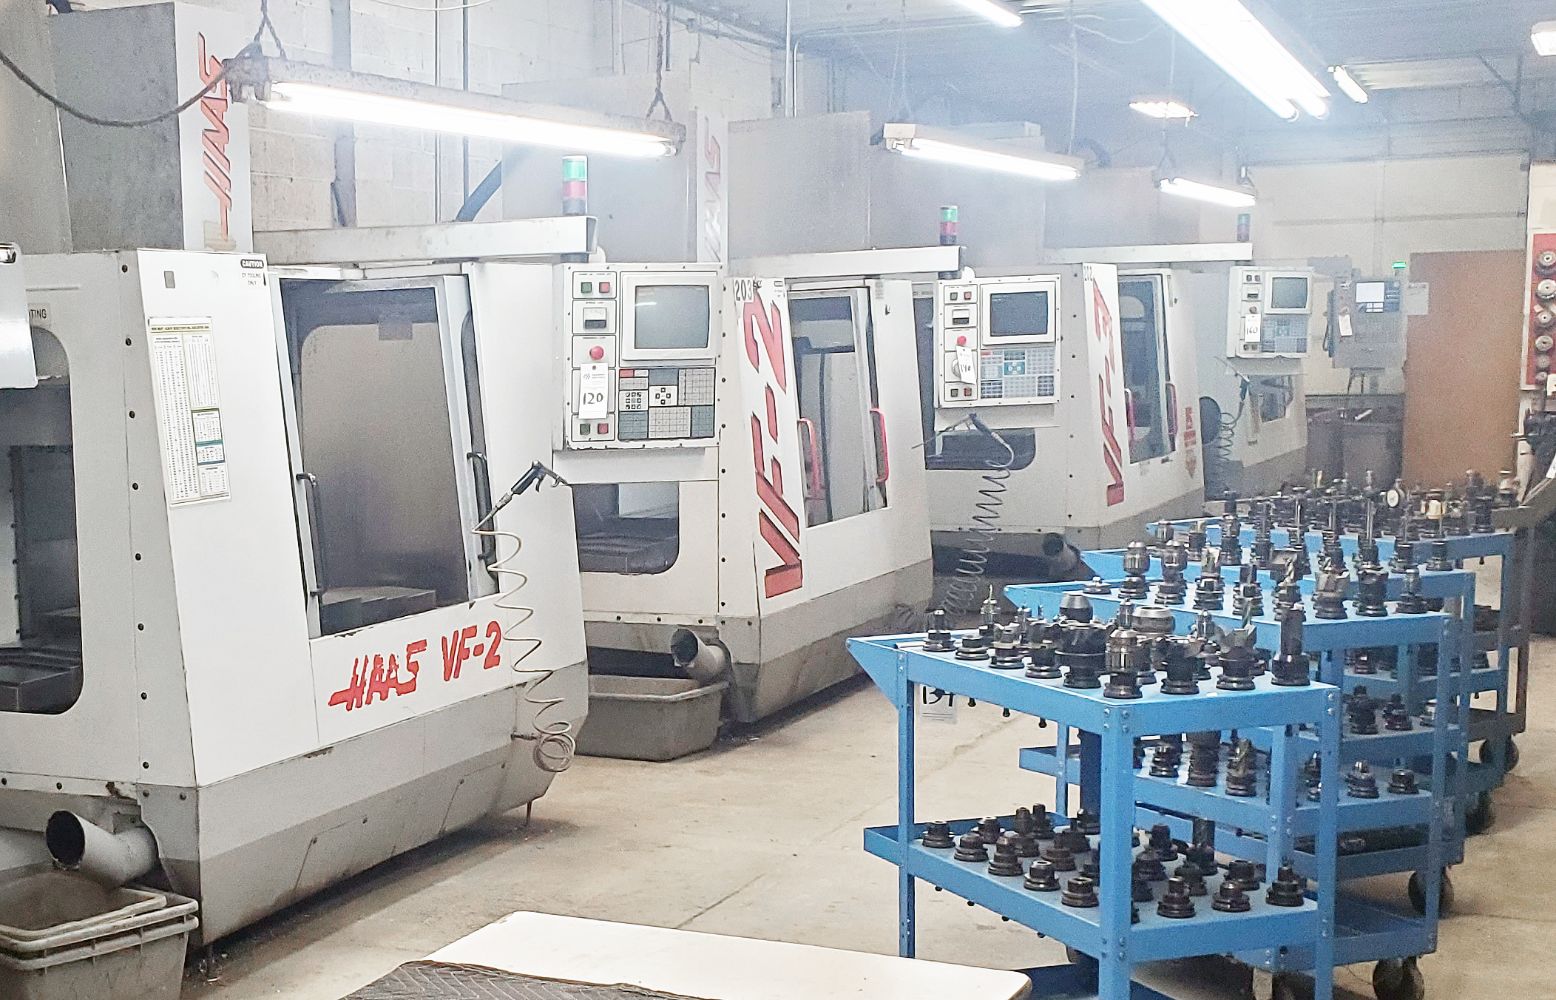 Owner Retiring - Complete Haas CNC Machine Shop Liquidation